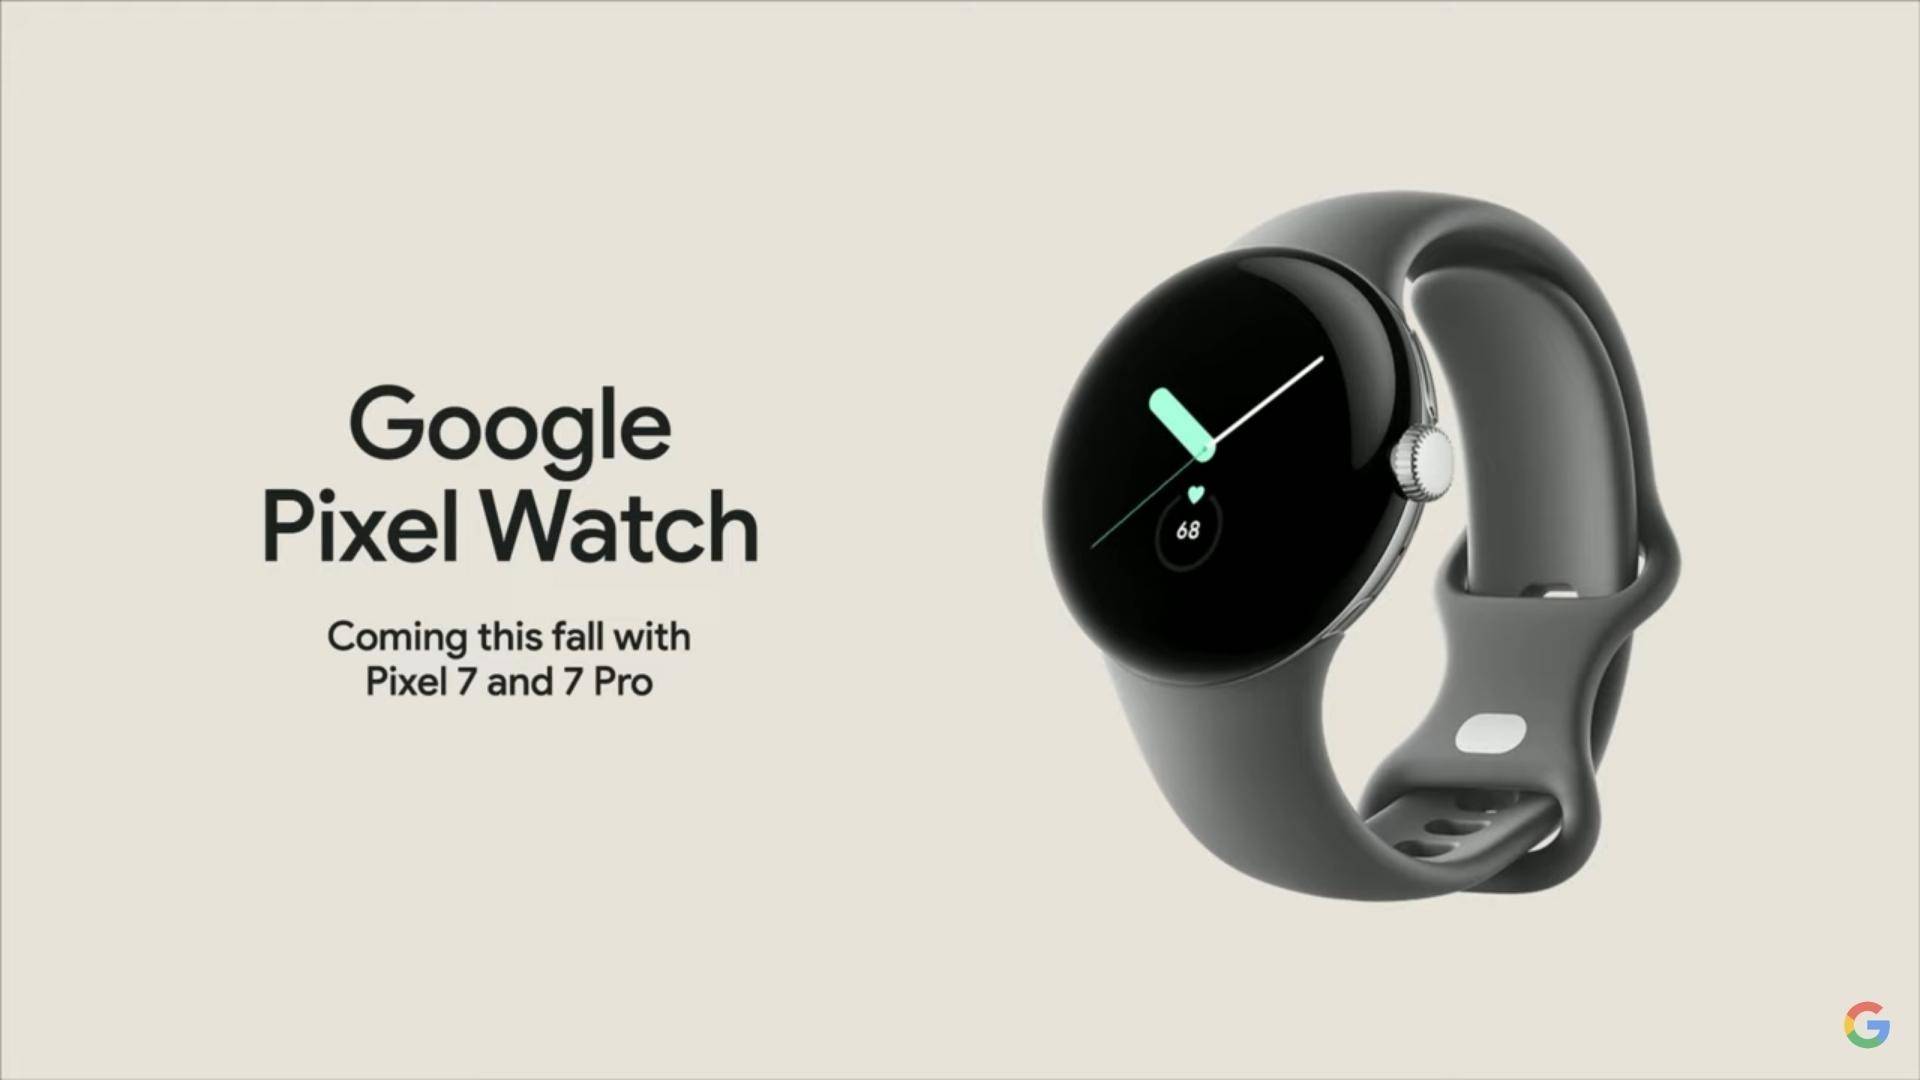 Google Pixel Watch Launch Details